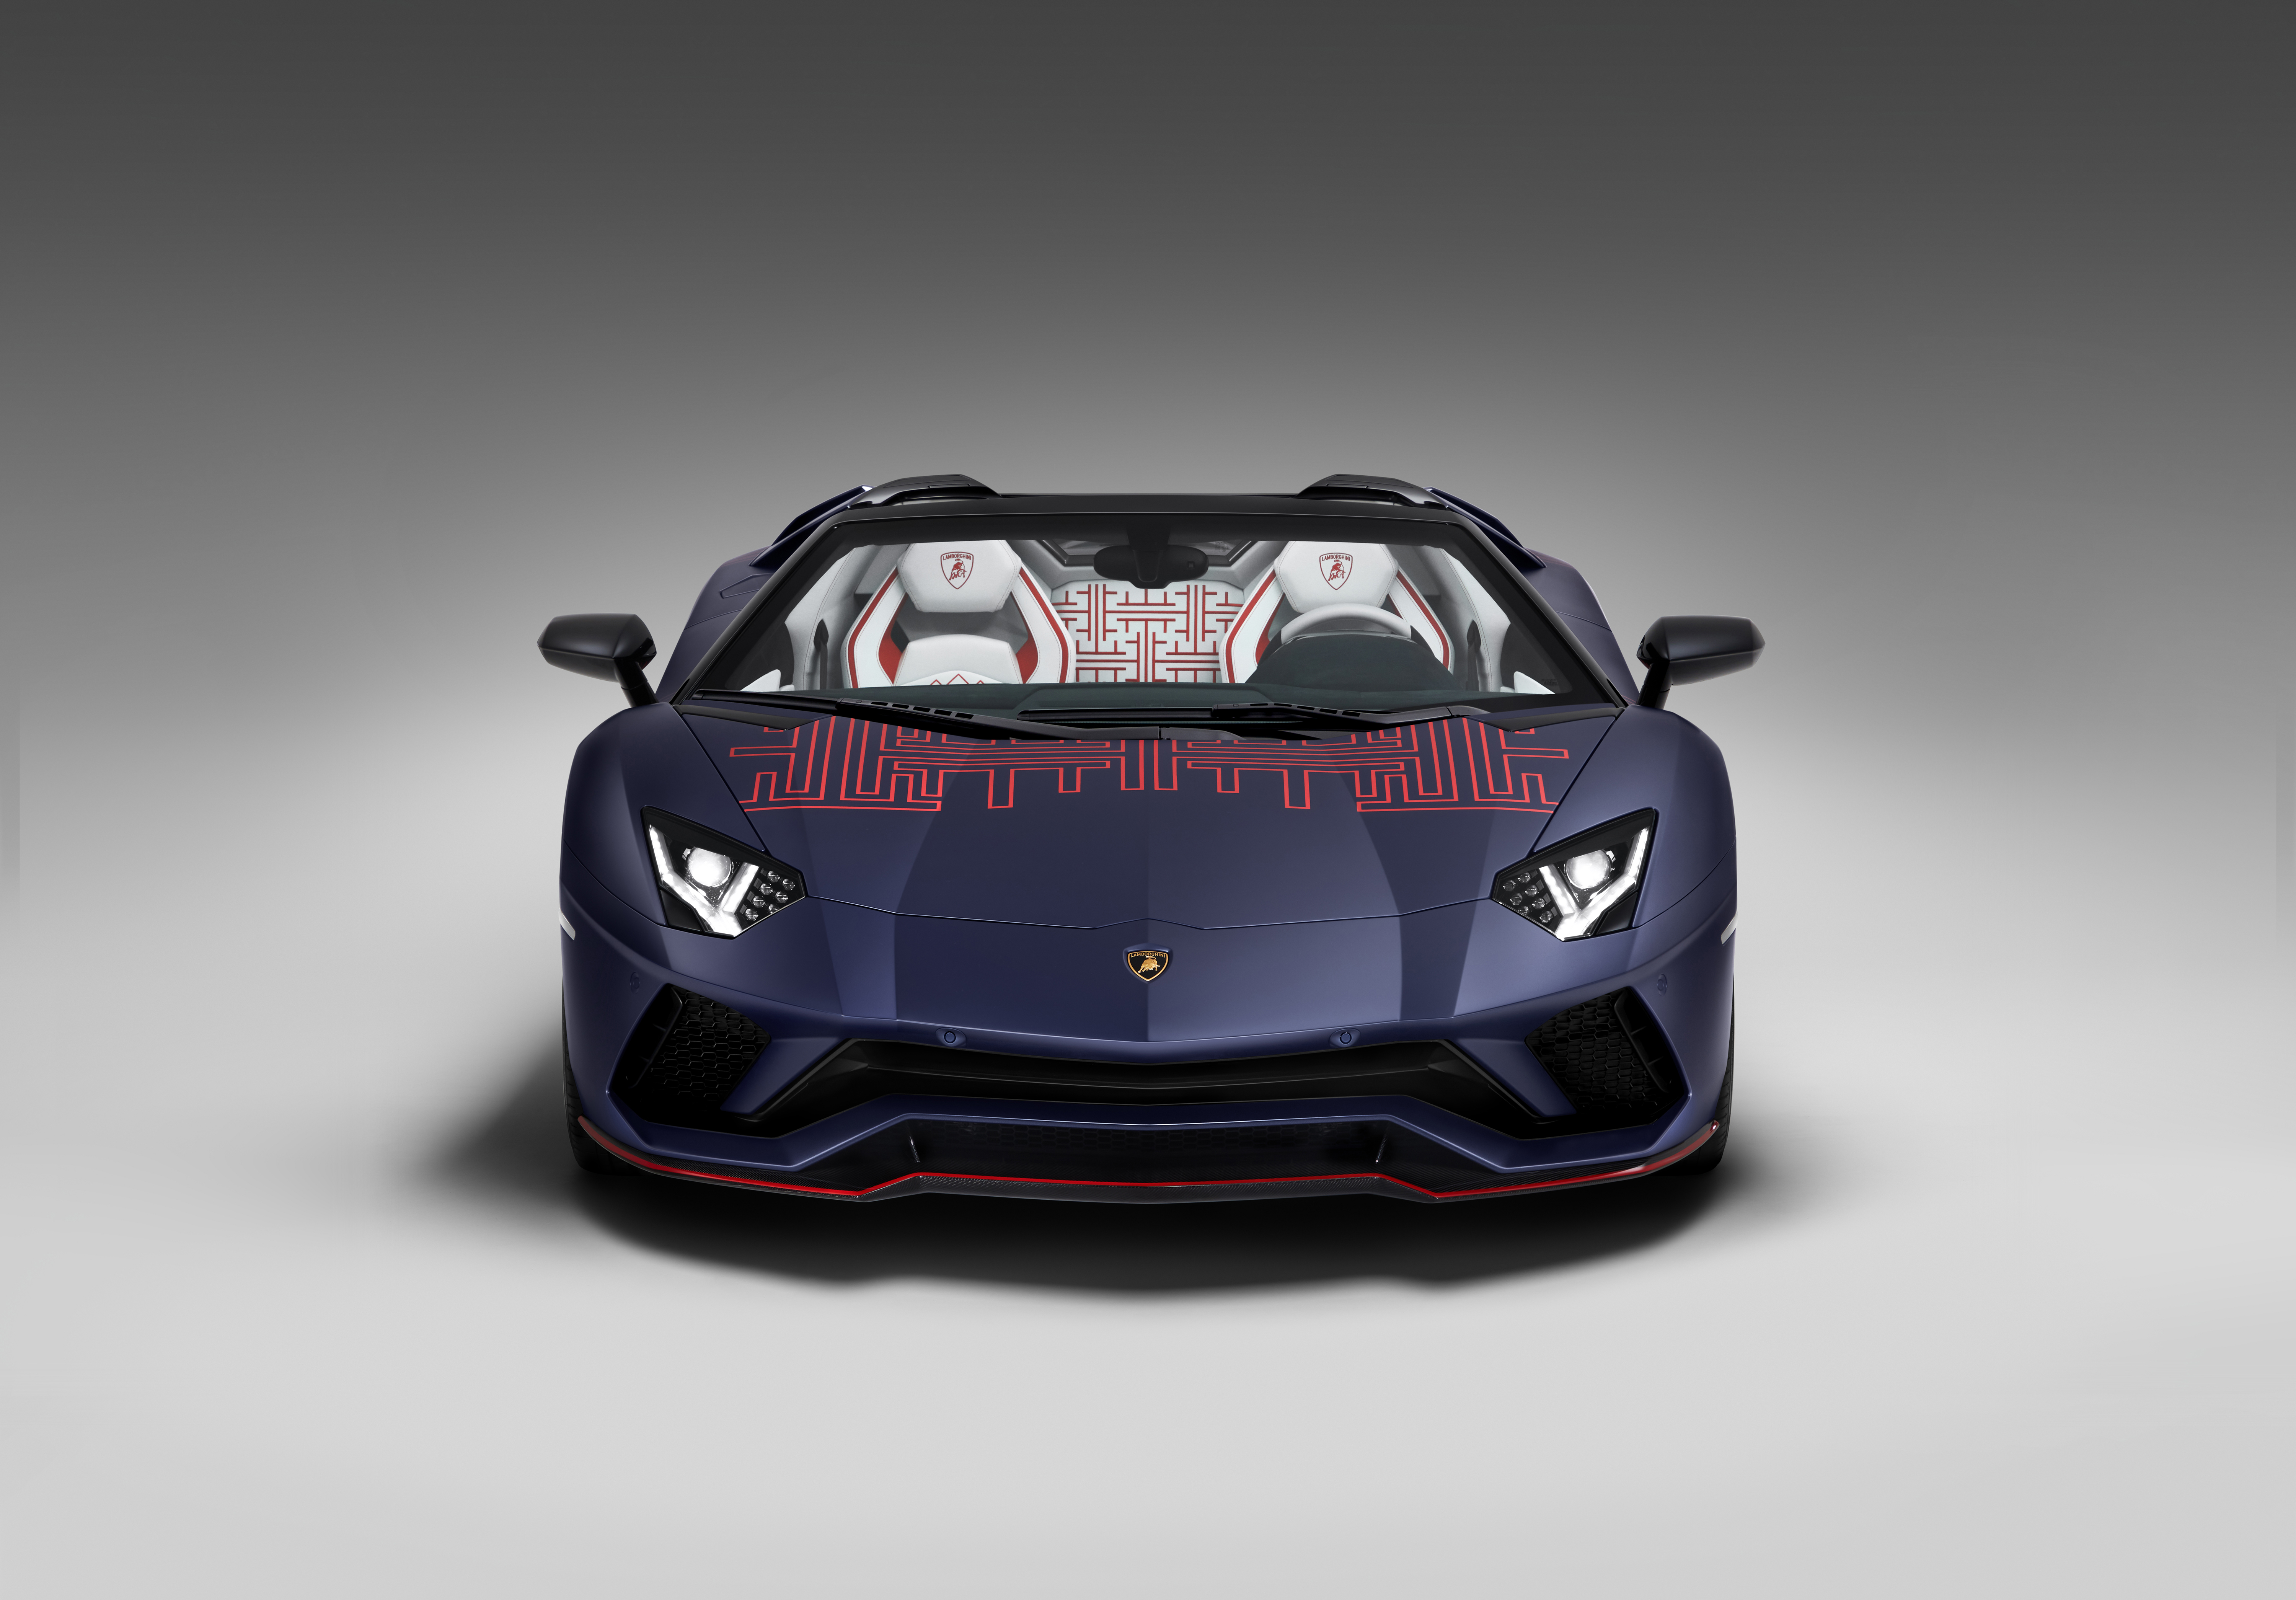 1535130 Fondos de pantalla e Lamborghini Aventador S imágenes en el escritorio. Descarga protectores de pantalla  en tu PC gratis